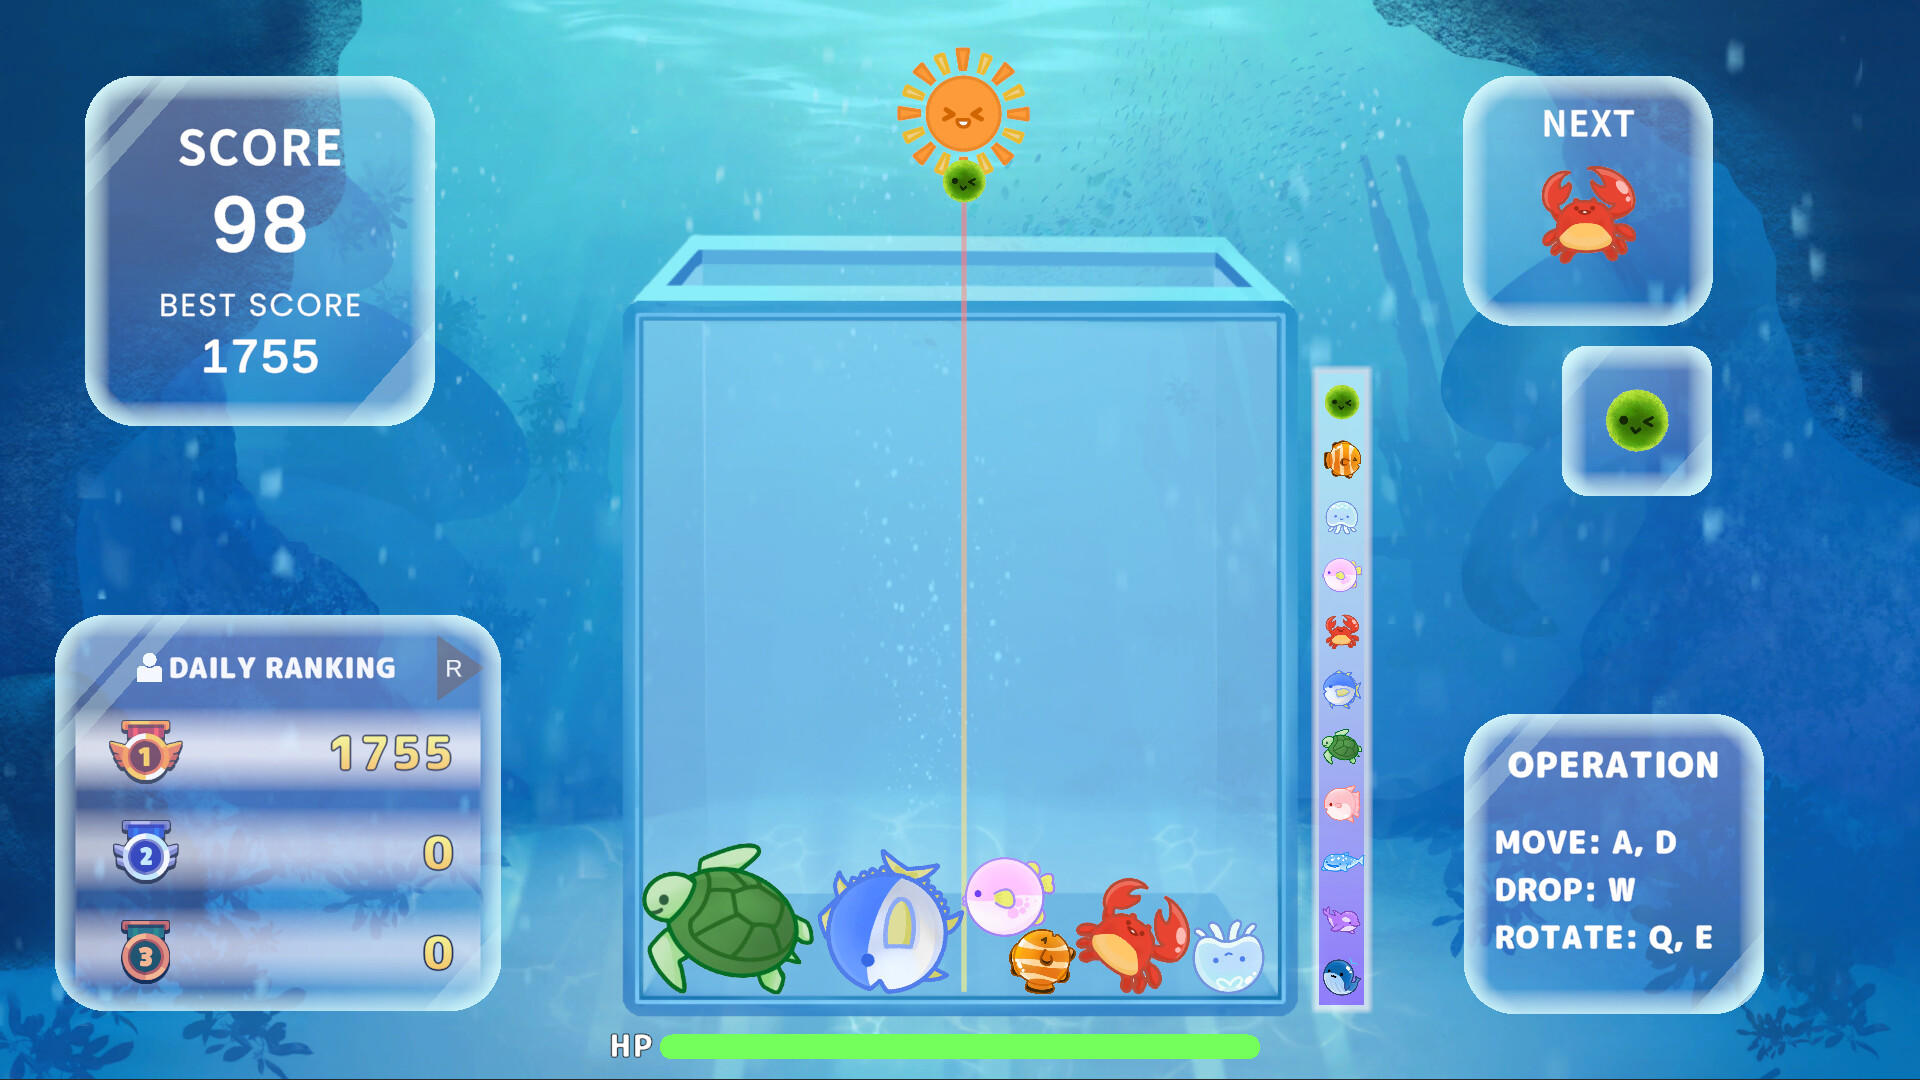 WhaleGameOnline screenshot game